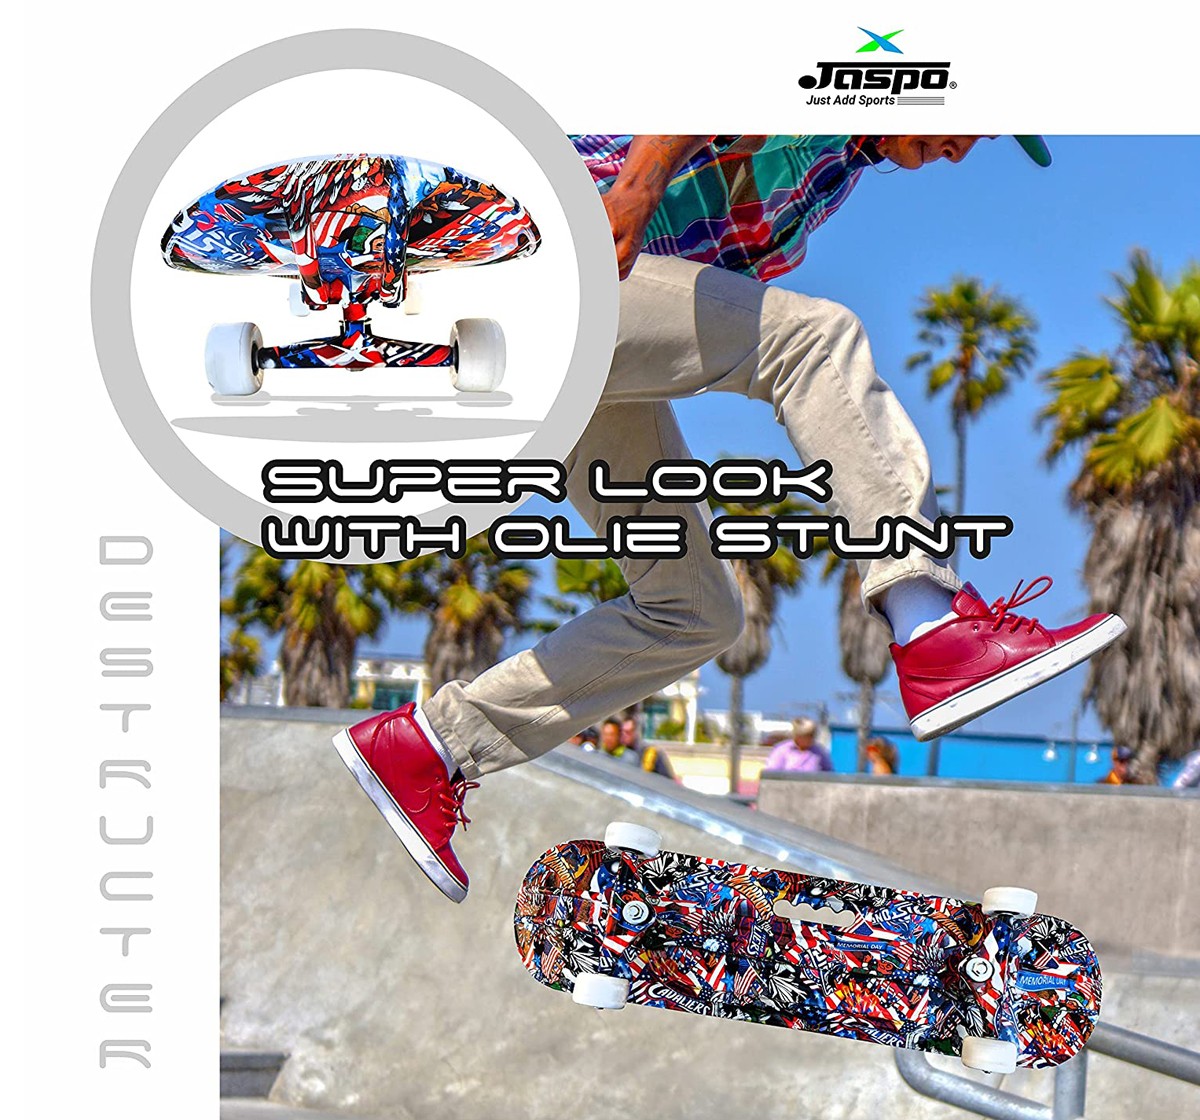 Jaspo Destructor Graffiti Fiber Skateboards Multicolor 8Y+